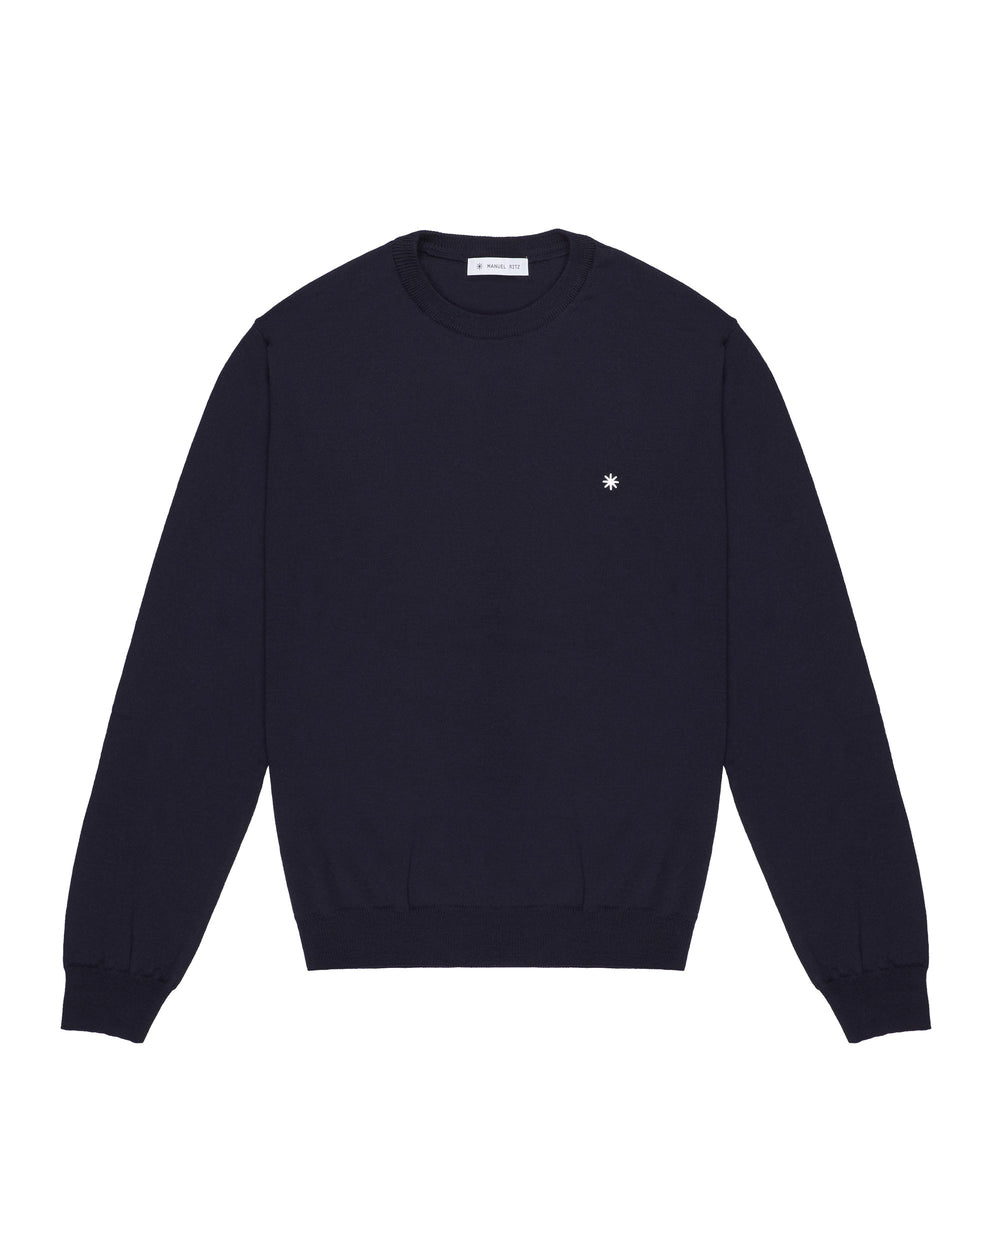 blue slim crewneck sweater pure wool